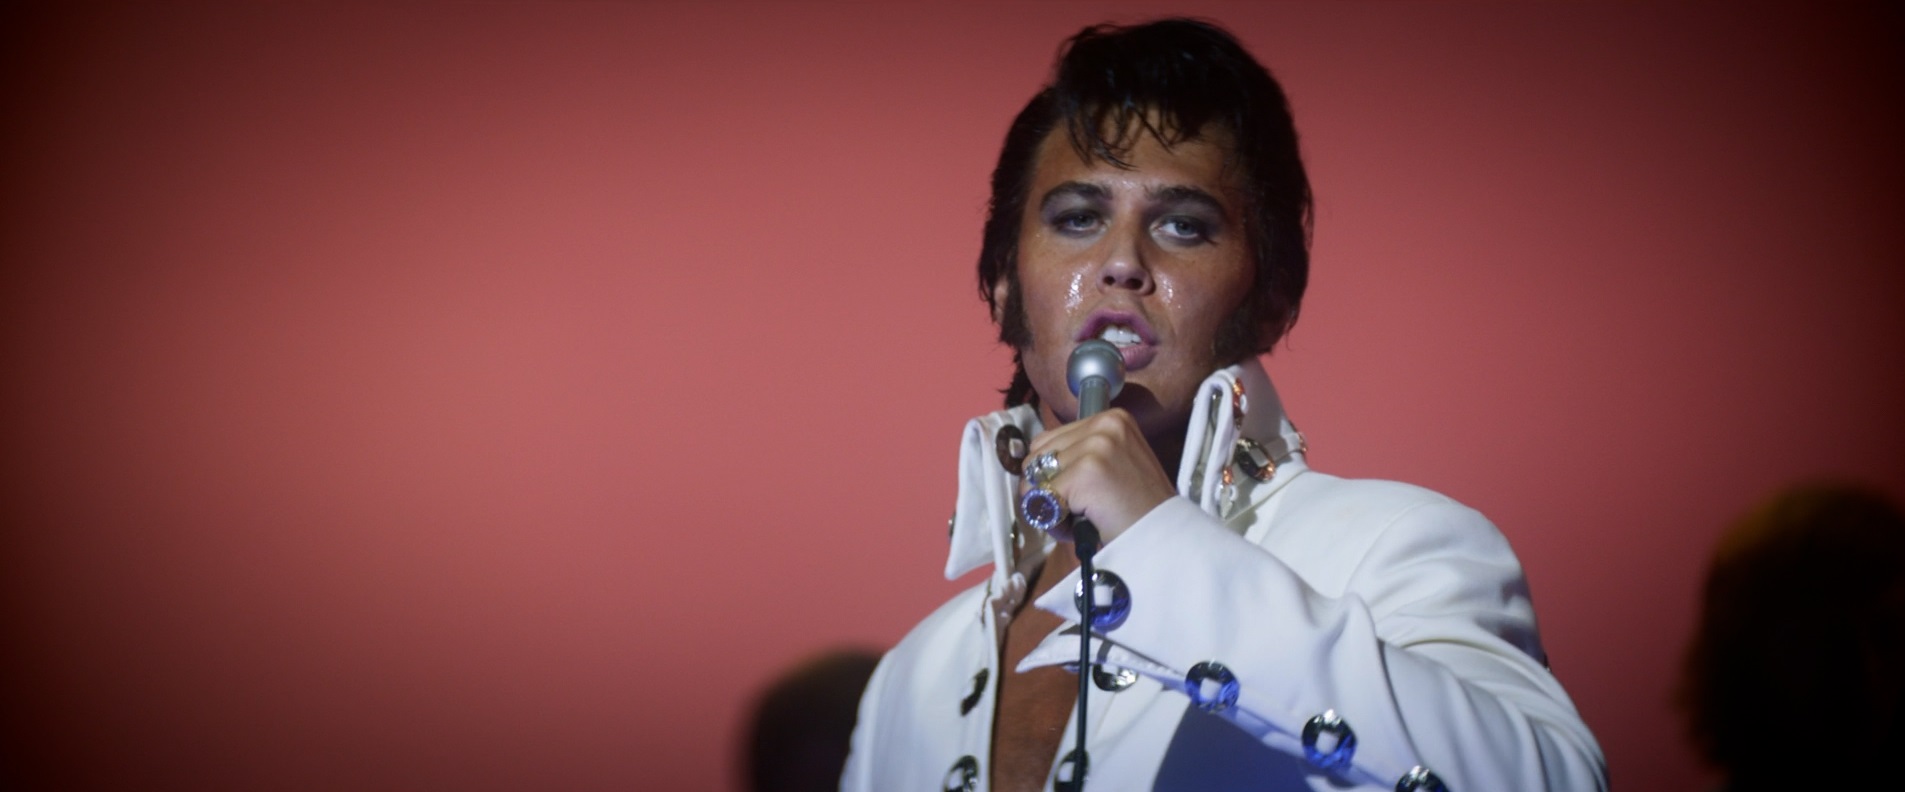 Kinotipp: Elvis